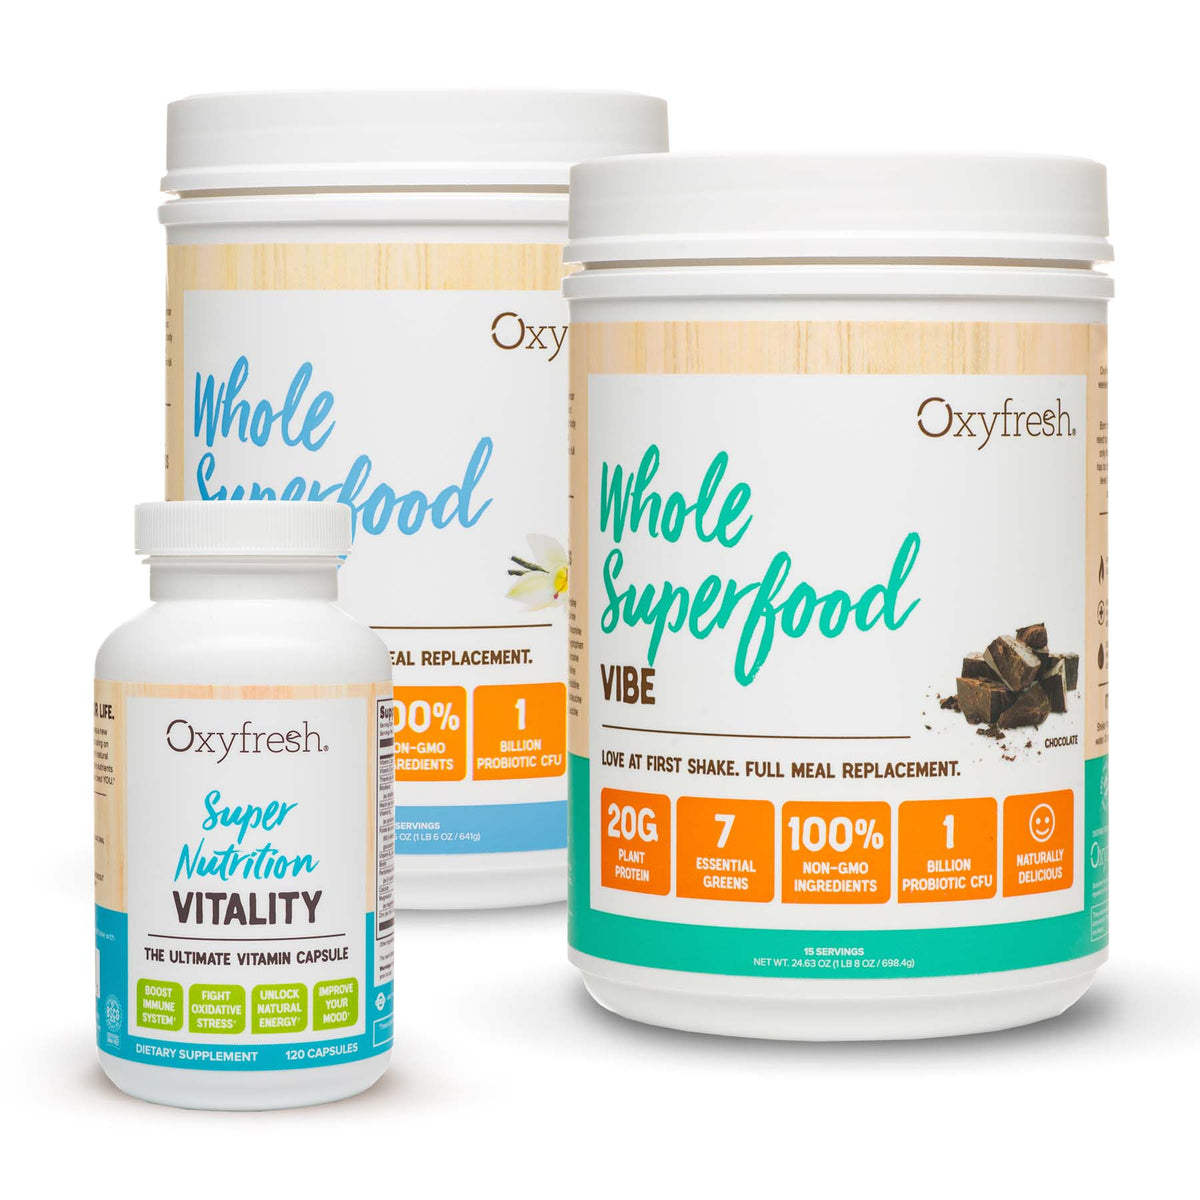 oxyfresh-fitness-bundle-including-vitality-vitamin-capsules-and-vegan-vibe-dairy-free-protein-powder